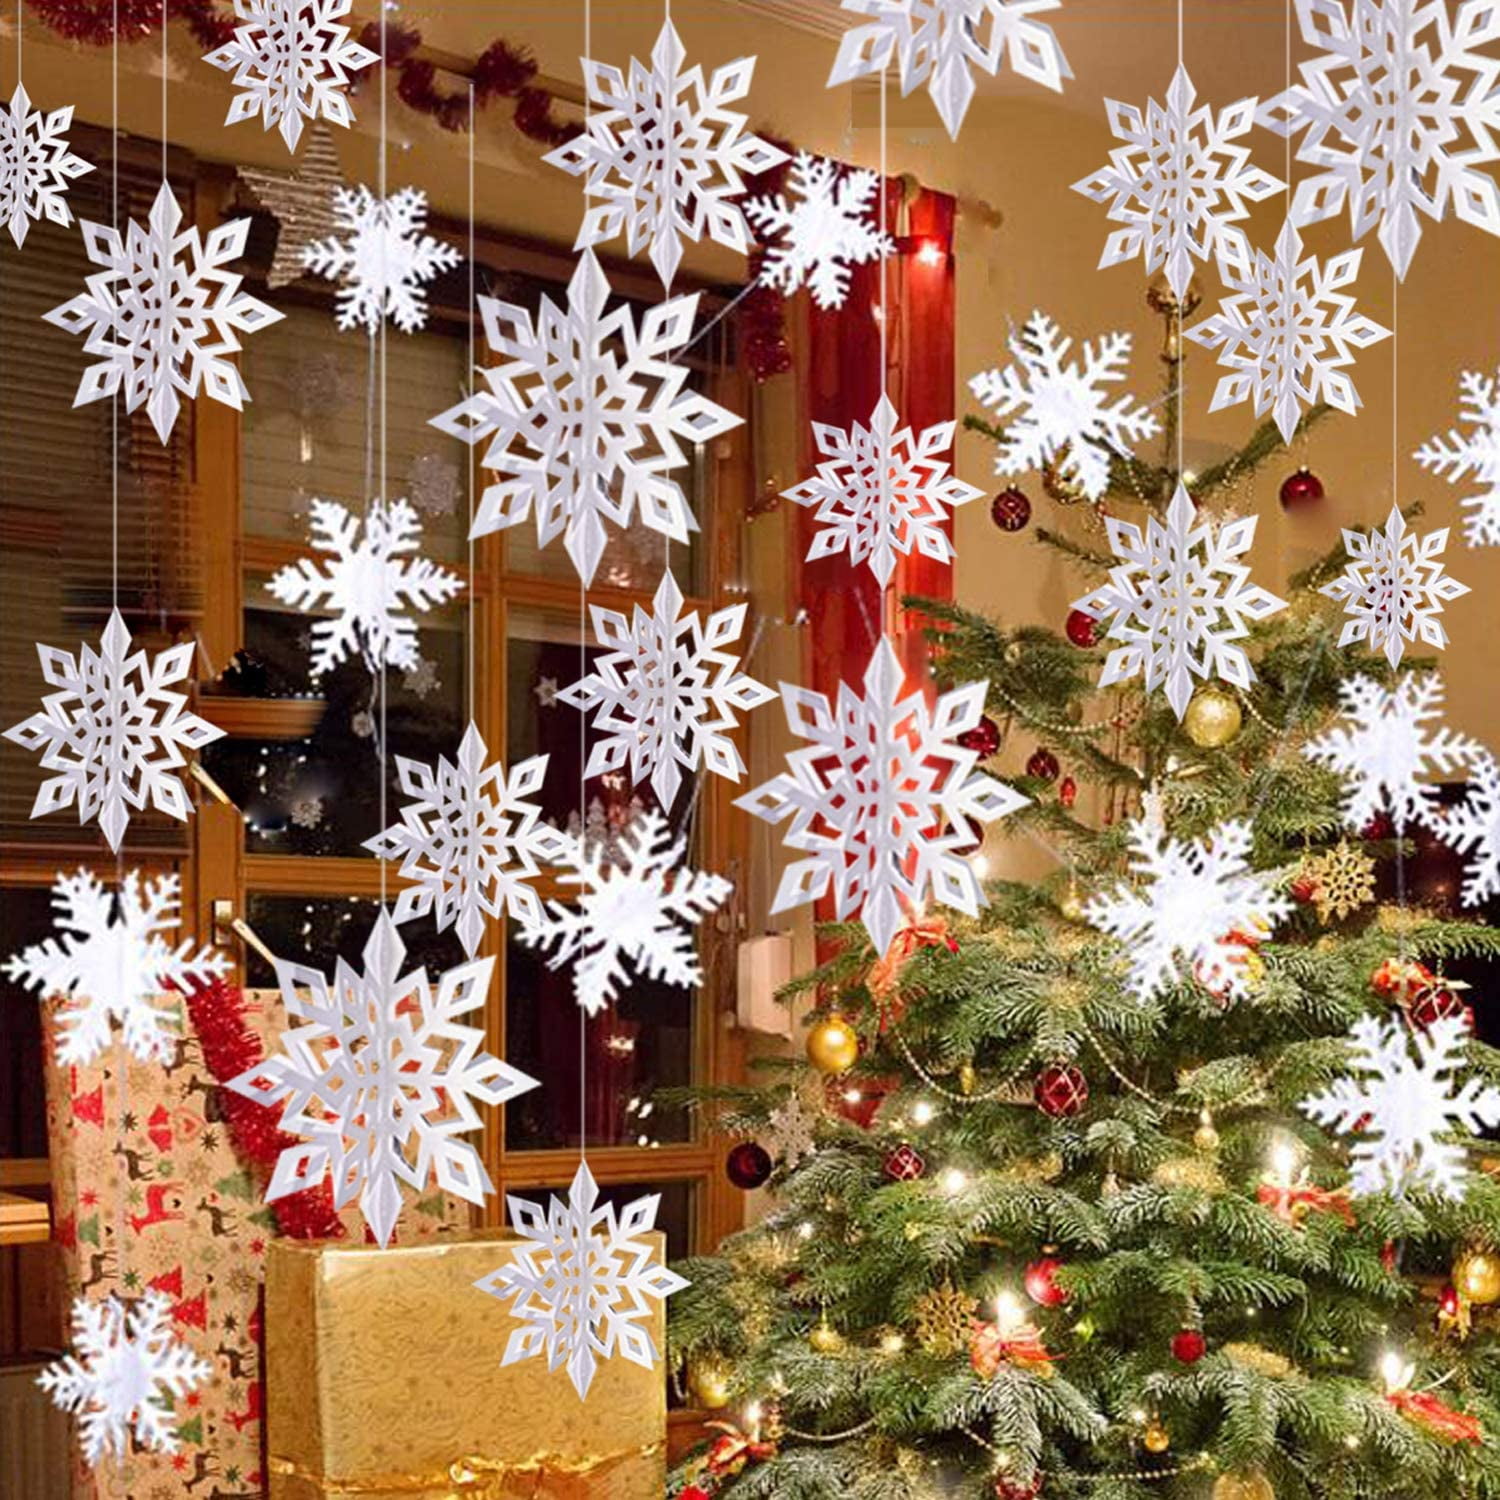 Confetti Glitter Artificial Snowflakes Paper Garland Christmas